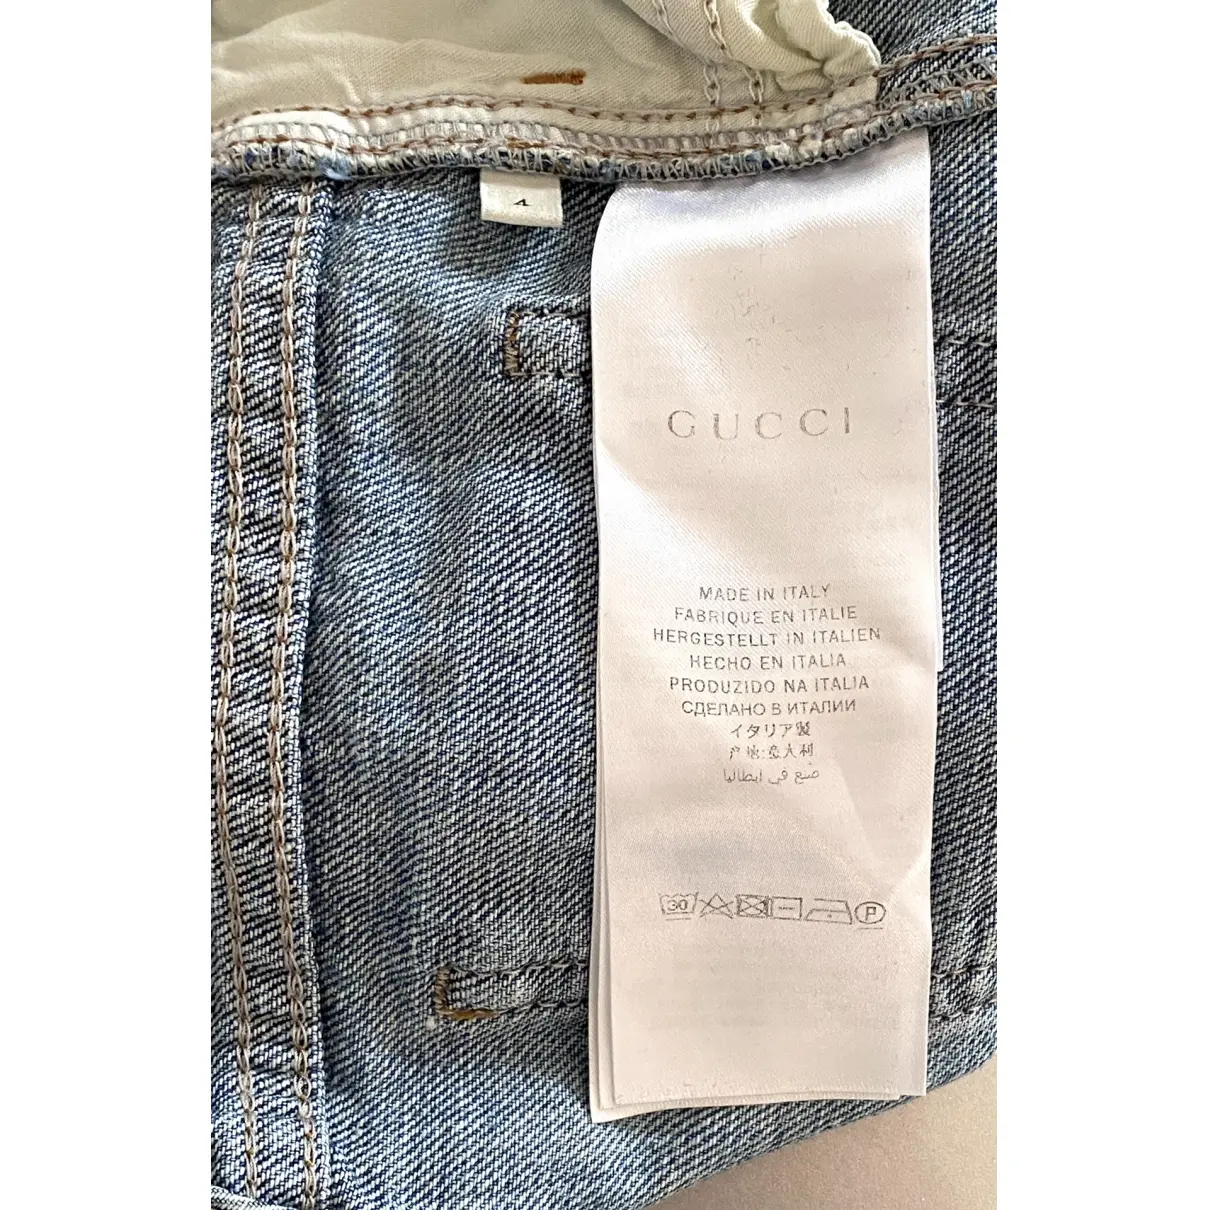 Jeans Gucci